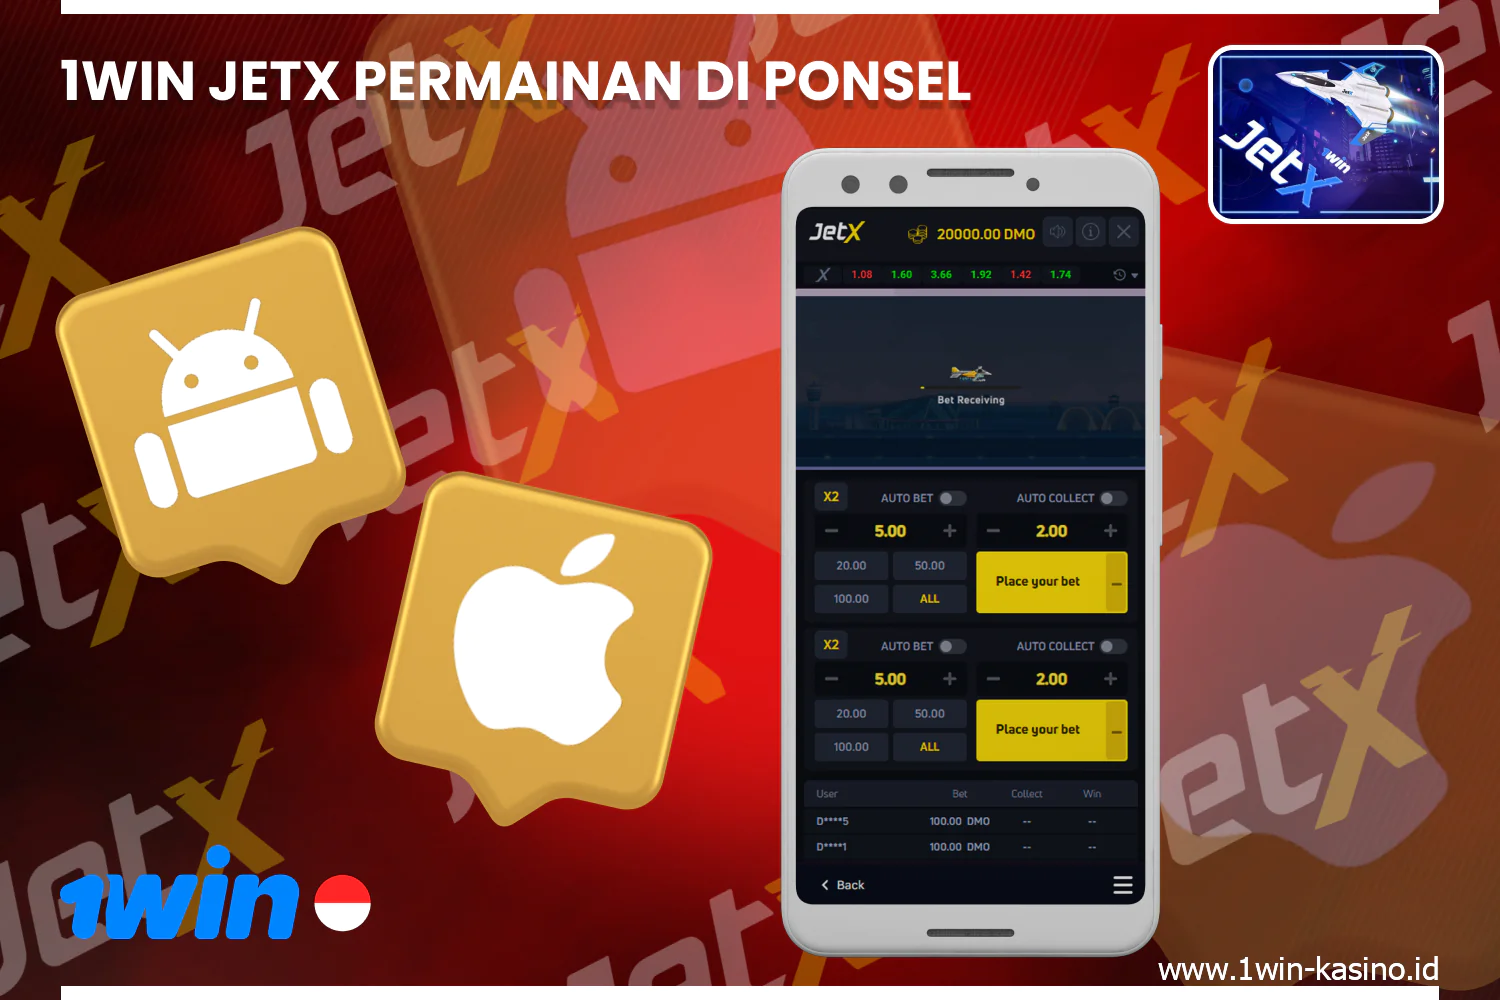 Aplikasi permainan 1win JetX tersedia untuk tablet dan ponsel pintar di iOS dan Android